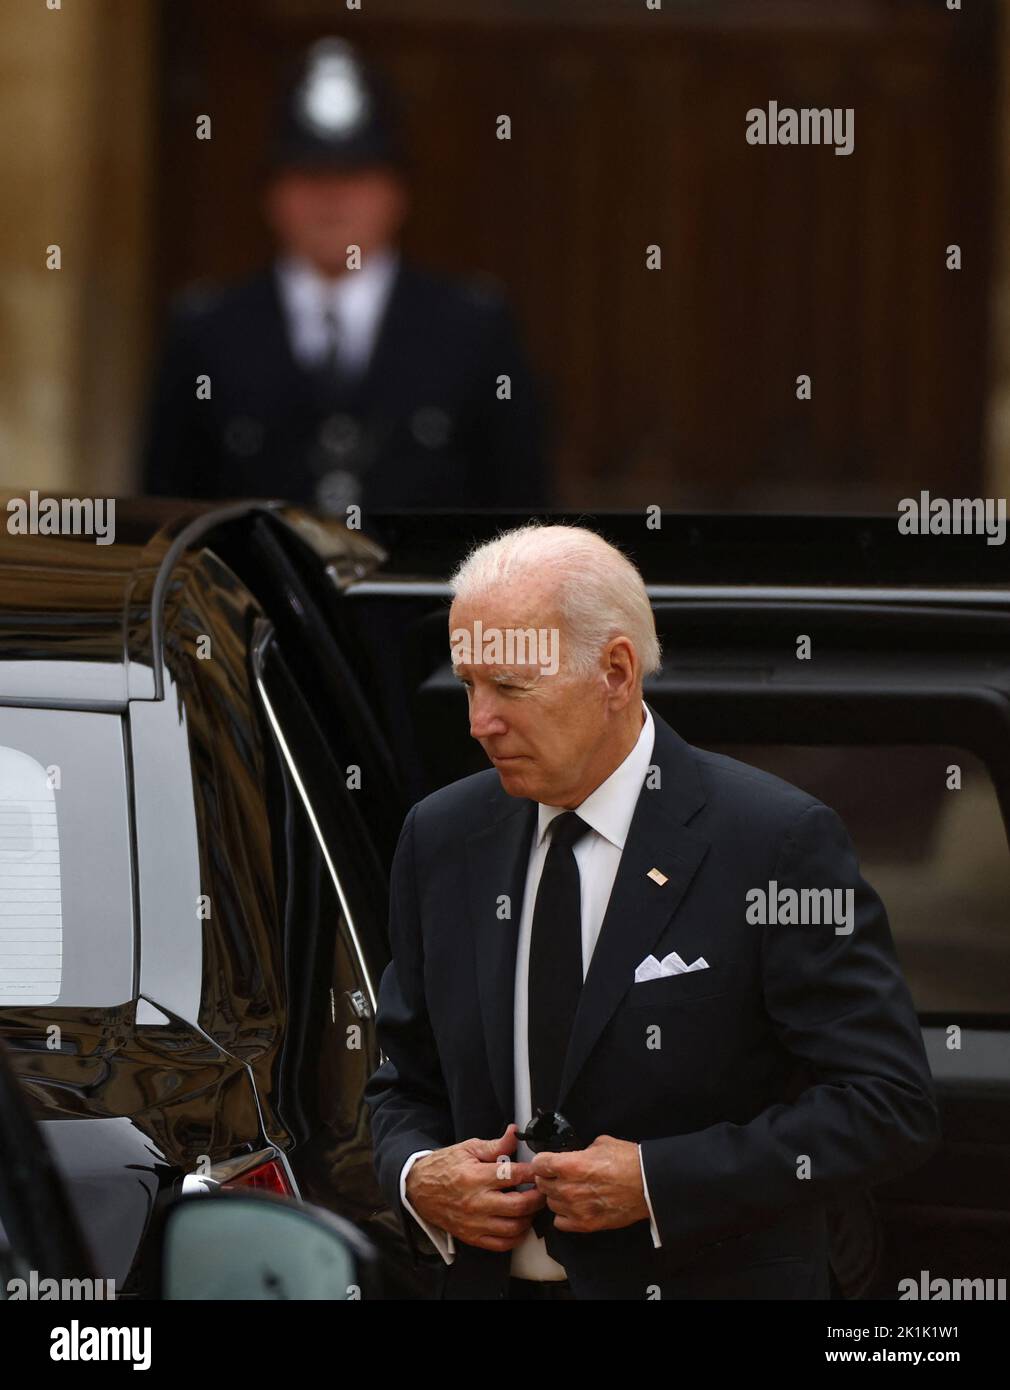 U.S. President Joe Biden attends the state funeral and burial of Britain's Queen Elizabeth, in London, Britain, September 19, 2022.  REUTERS/Kai Pfaffenbach Stock Photo